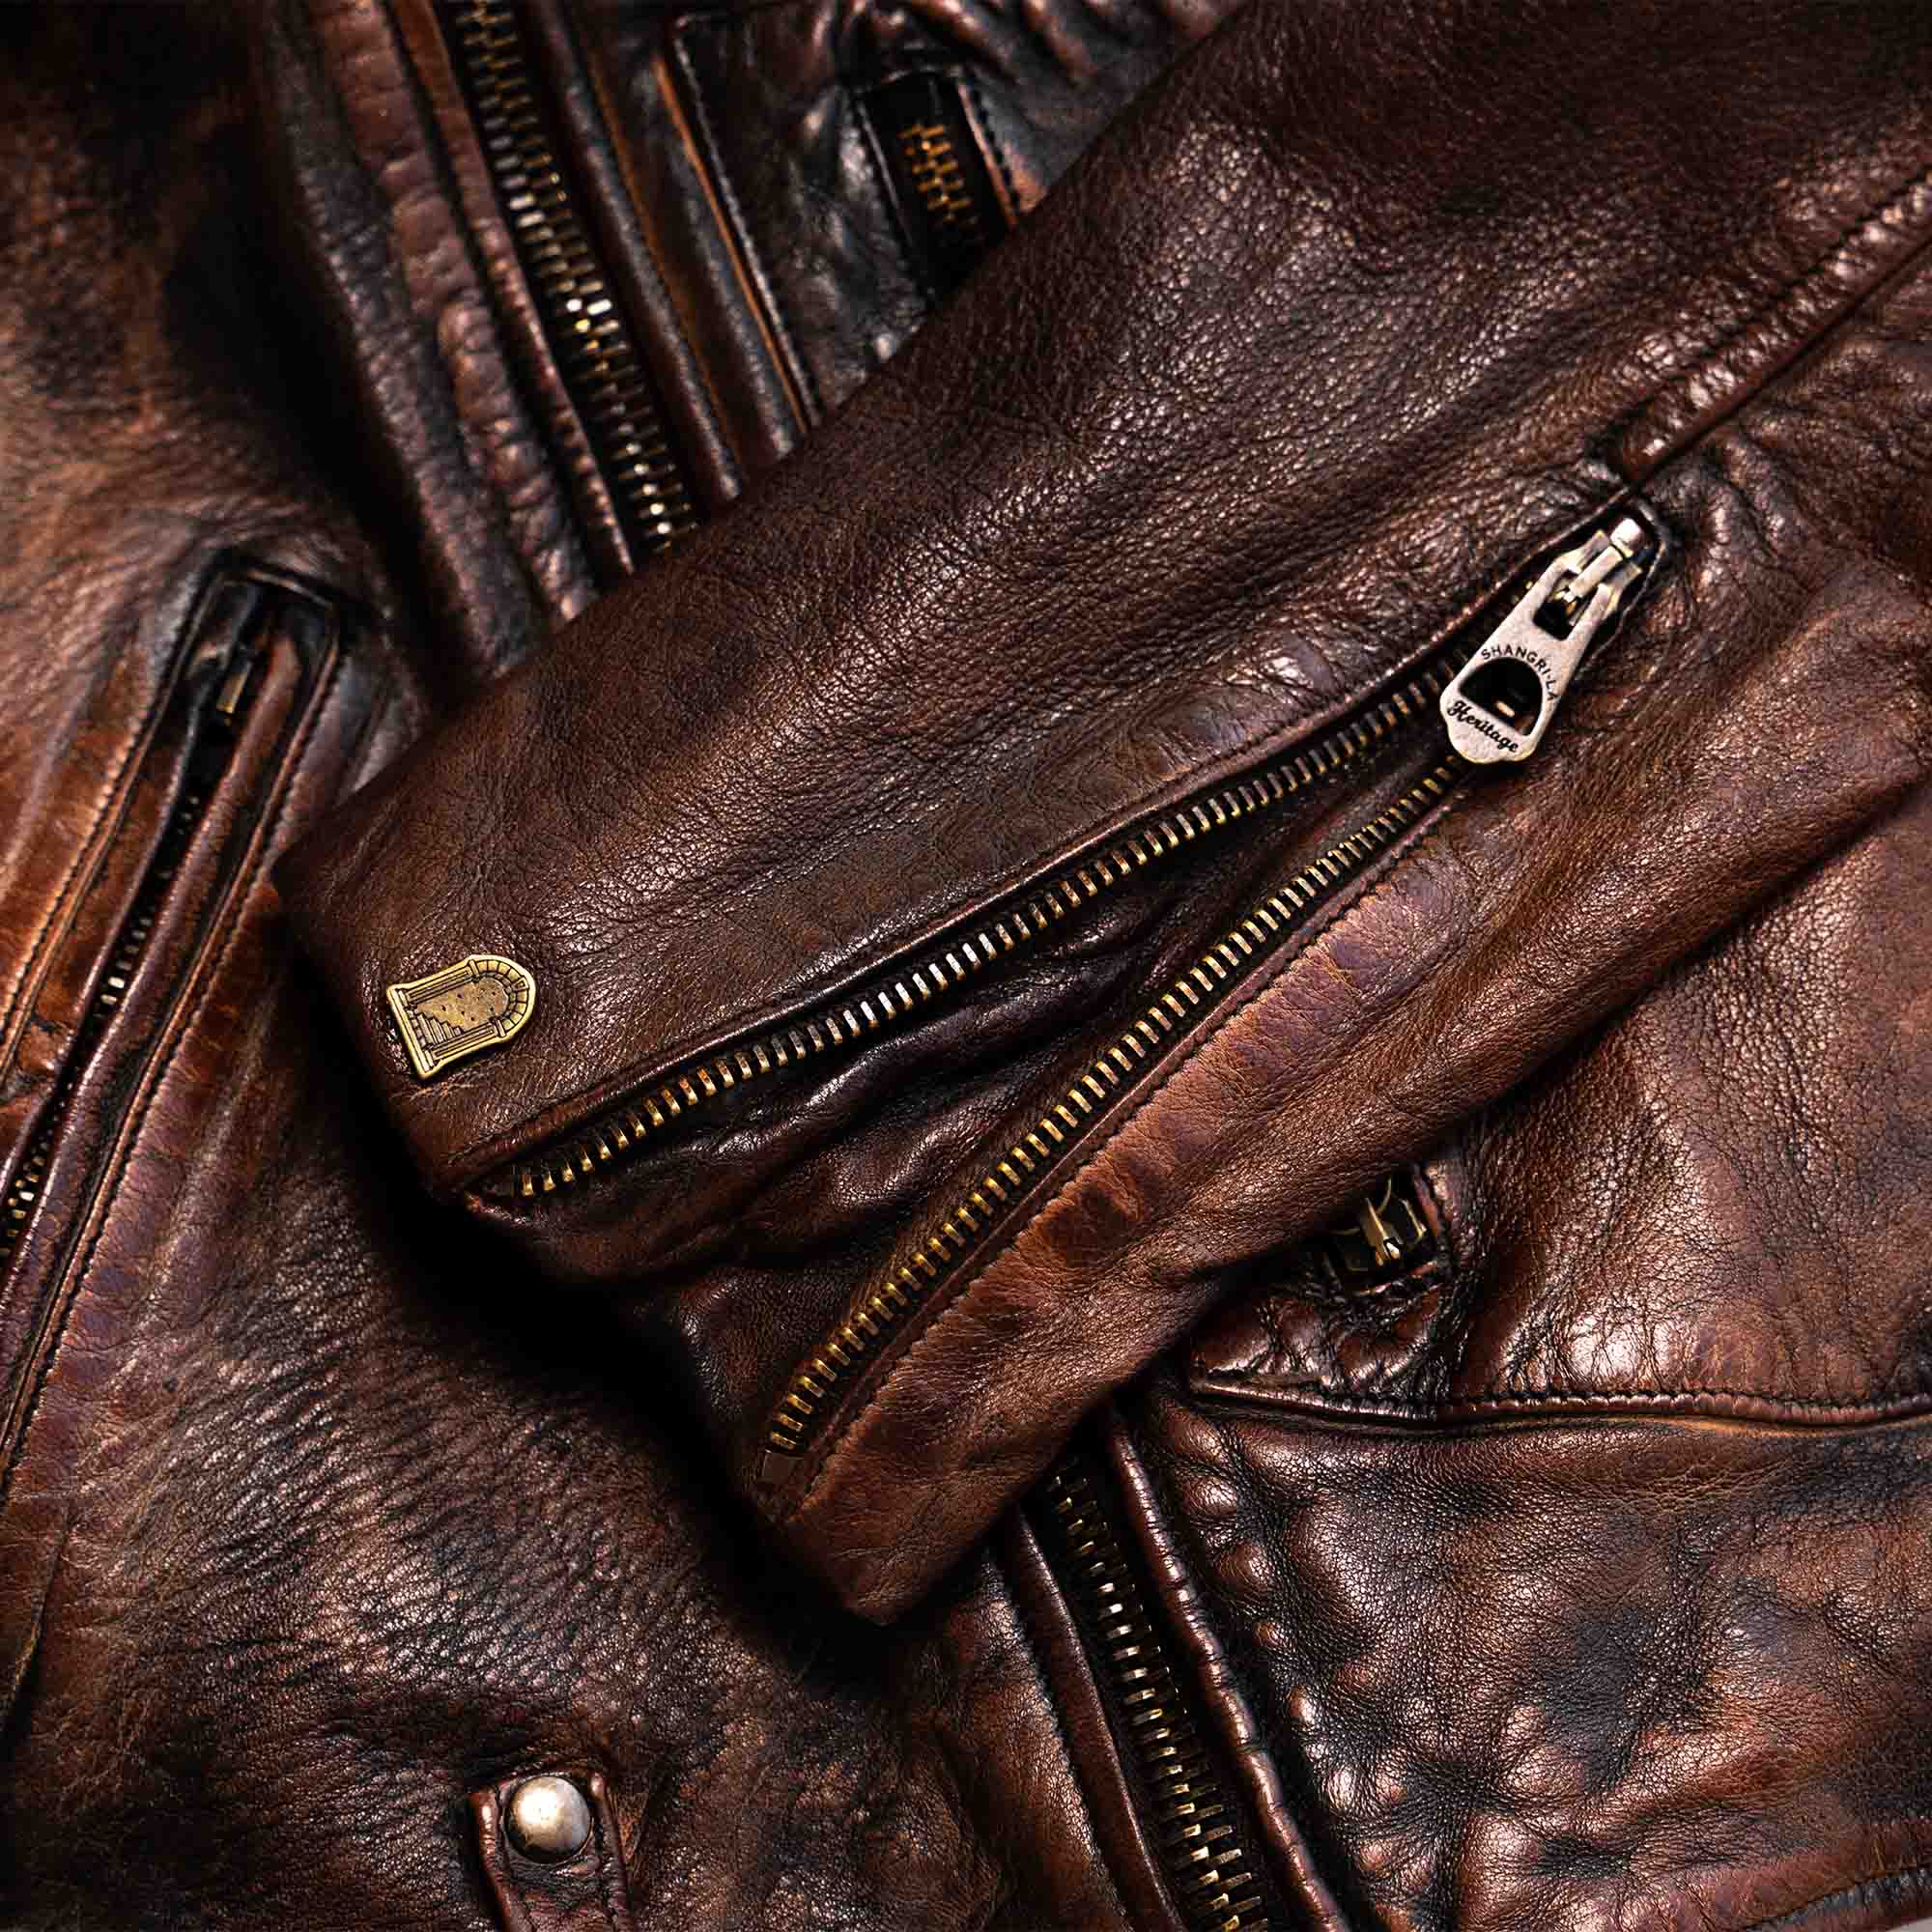 "Chiodo" Bruciato Leather Jacket